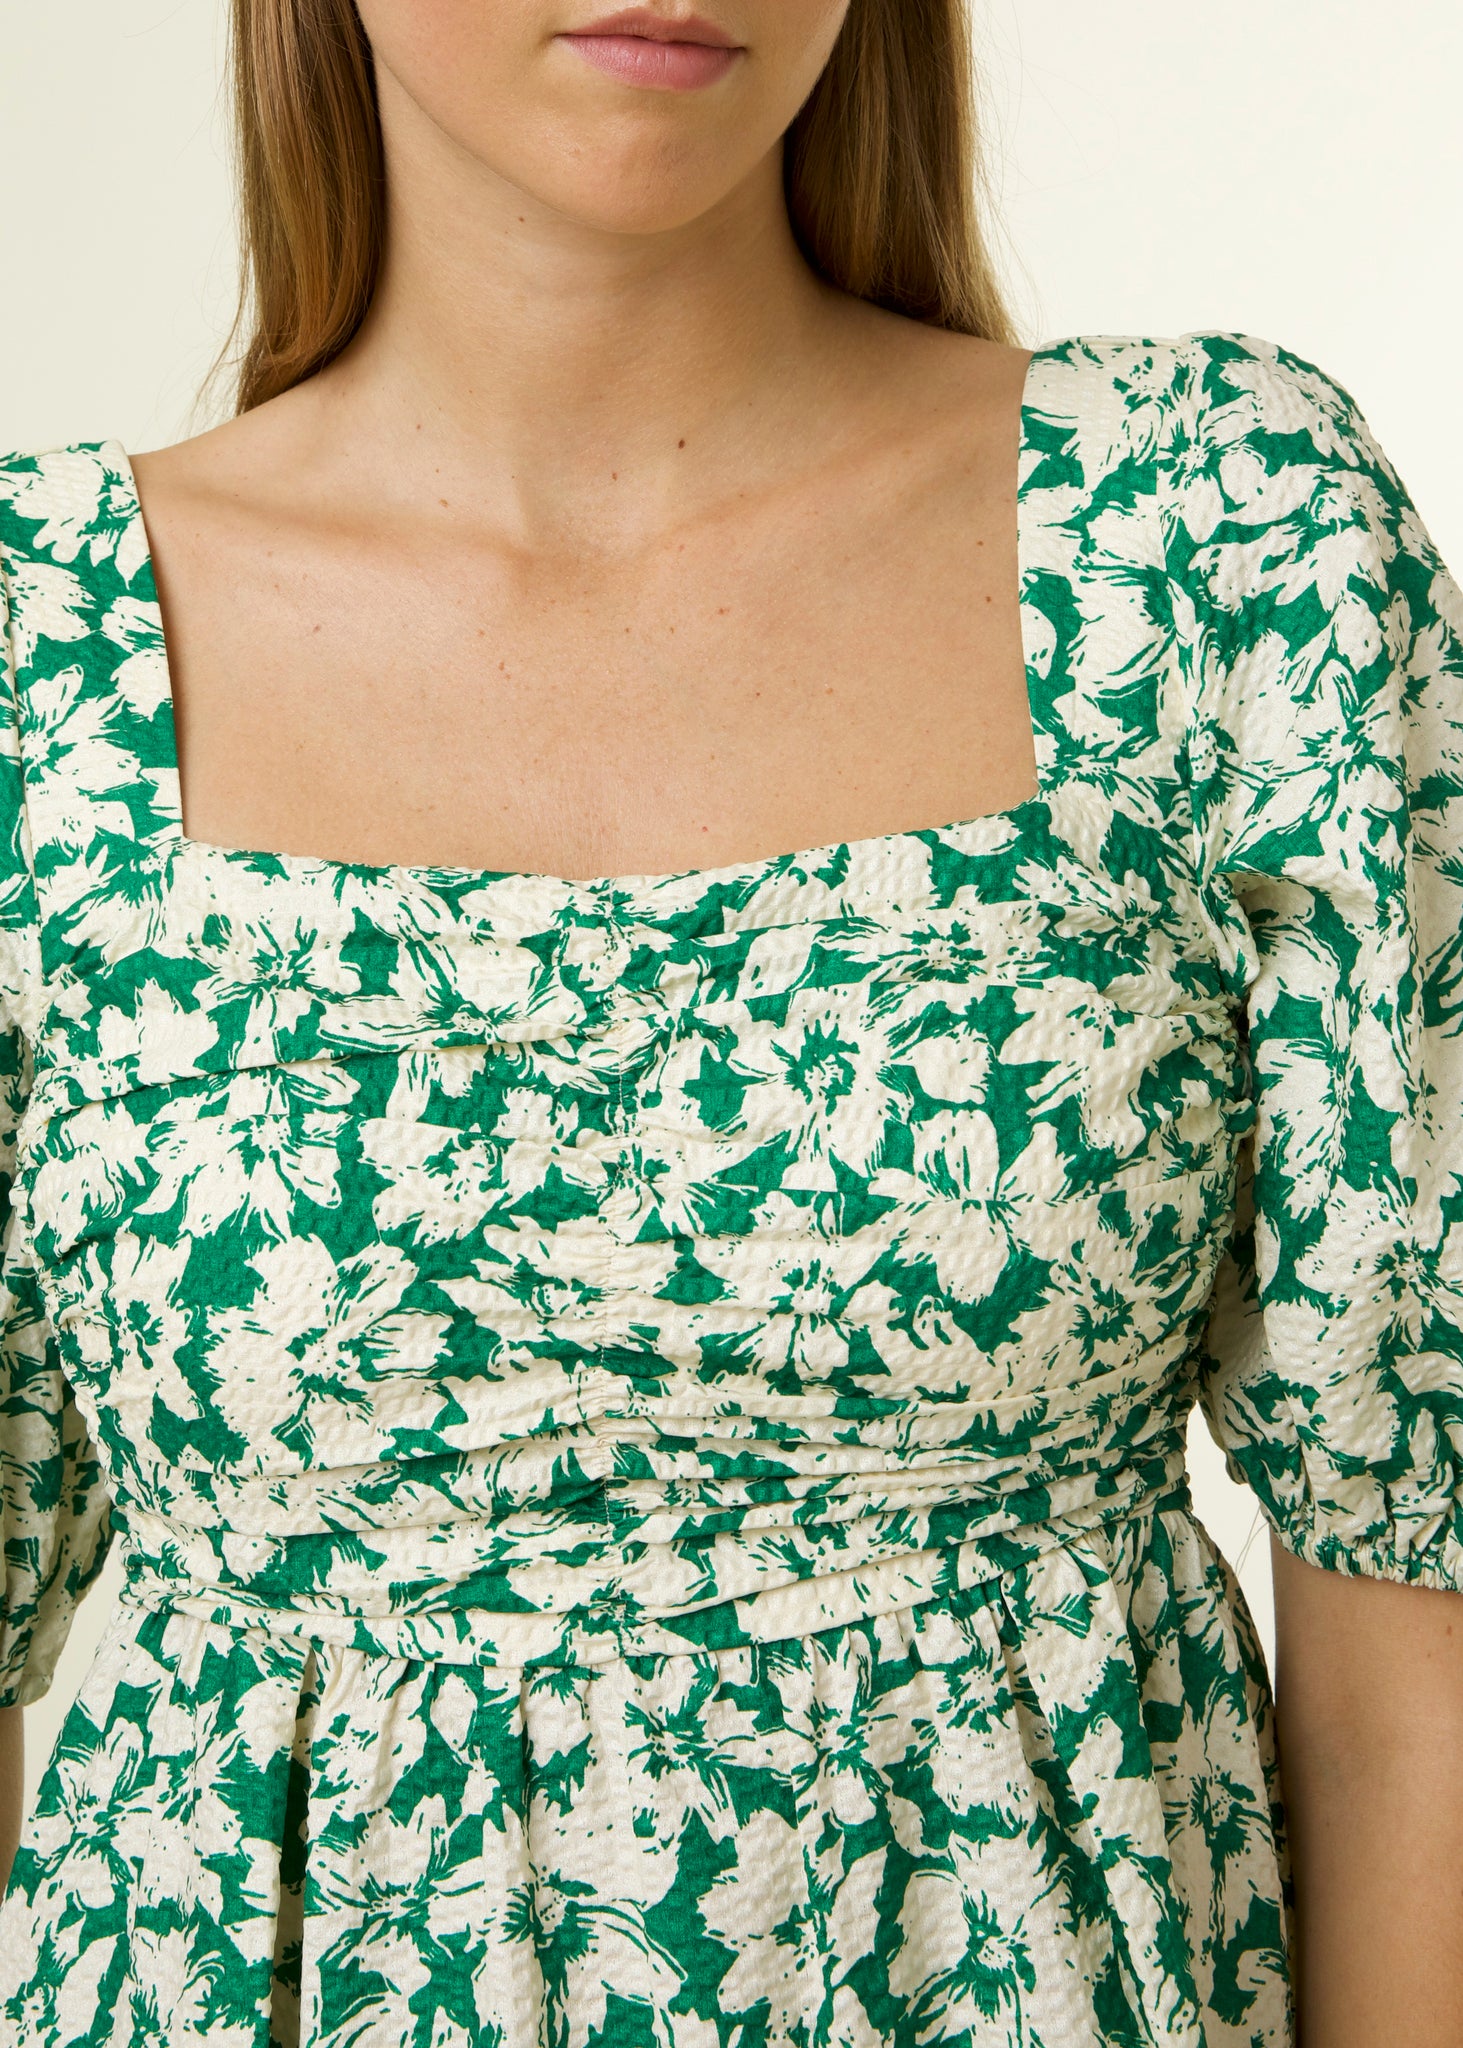 FRNCH - Emy Green Floral Dress